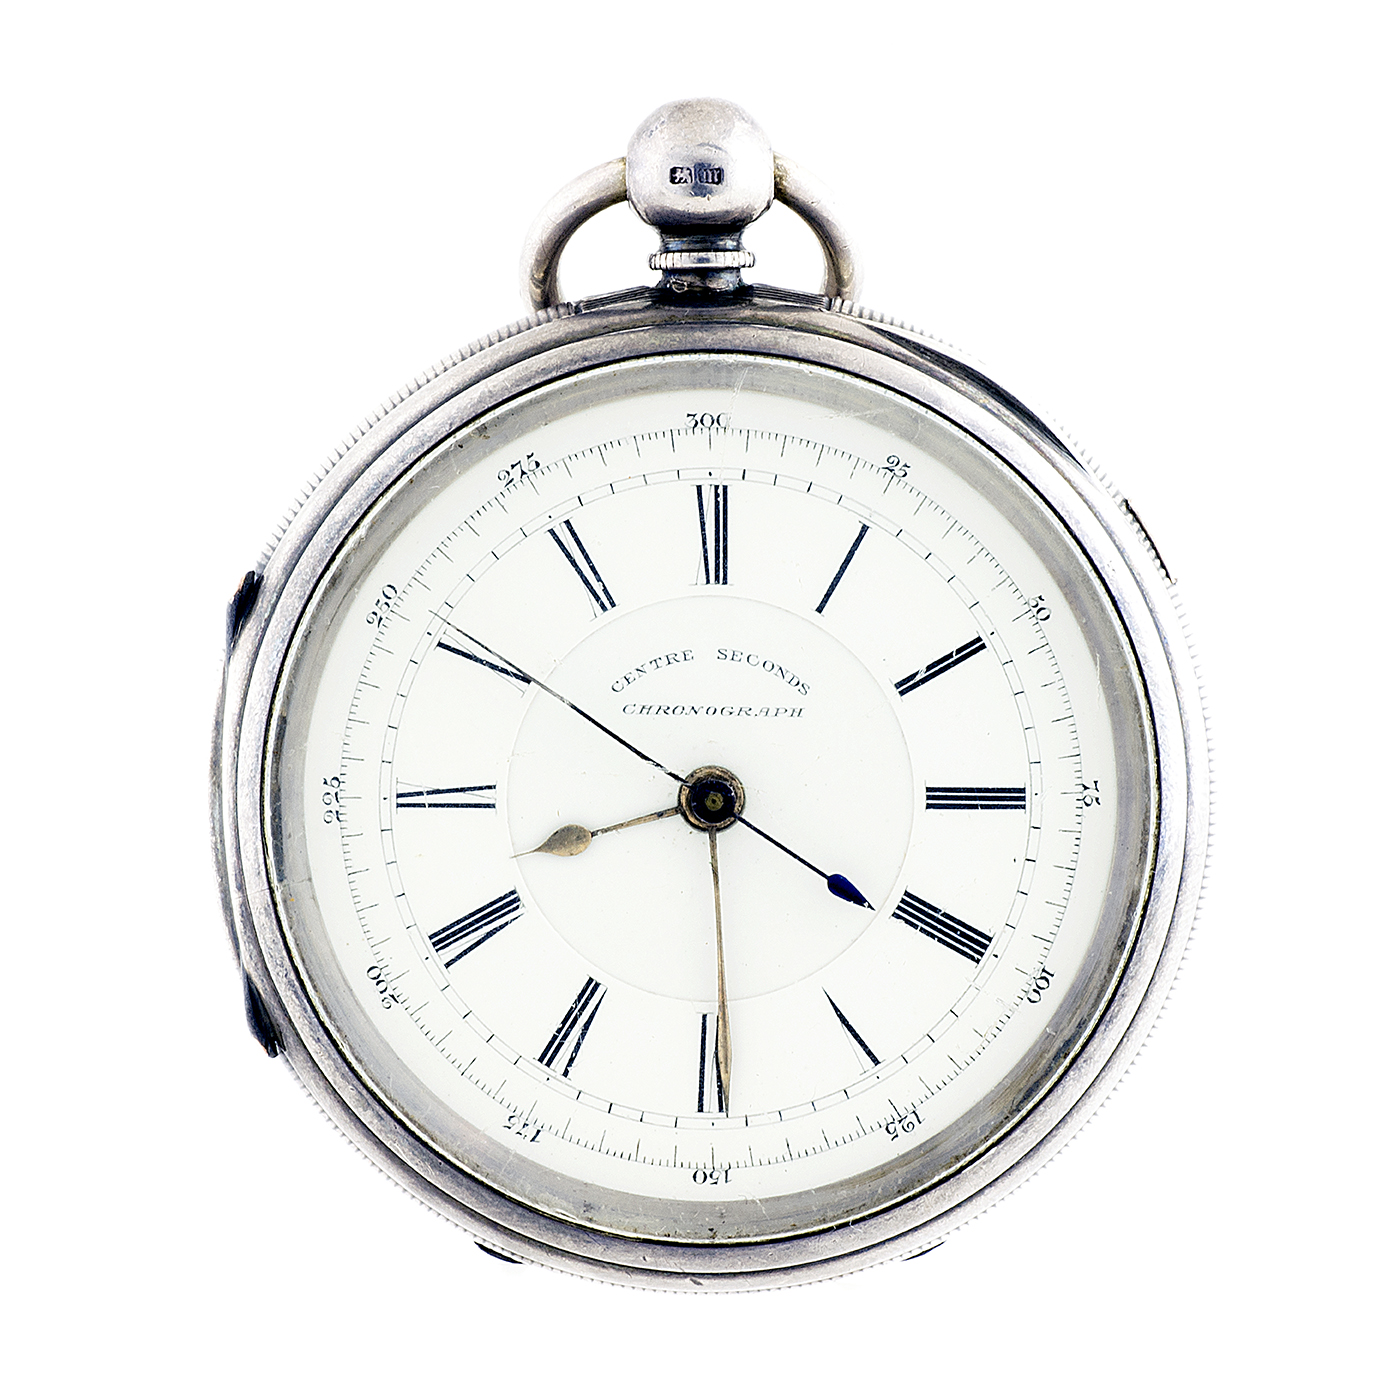 J.GOODMAN- Manchester. Reloj de Bolsillo, Lepine, De Doctor. Chester, 1886.